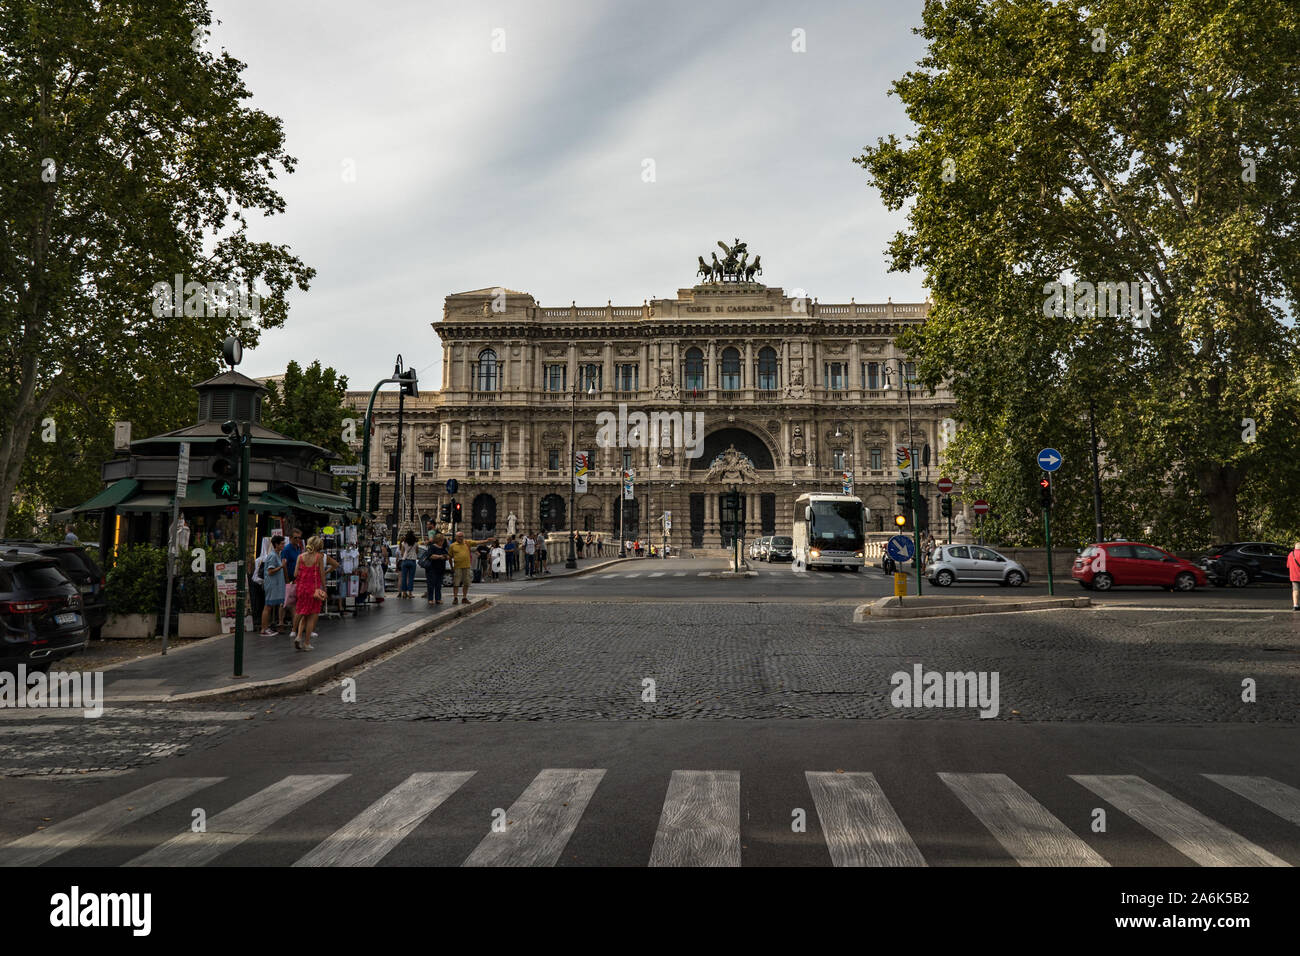 Der Palast der Justiz, Rom. Obersten Kassationsgericht. Äußere der Palast der Justiz in Rom, Italien. Stockfoto